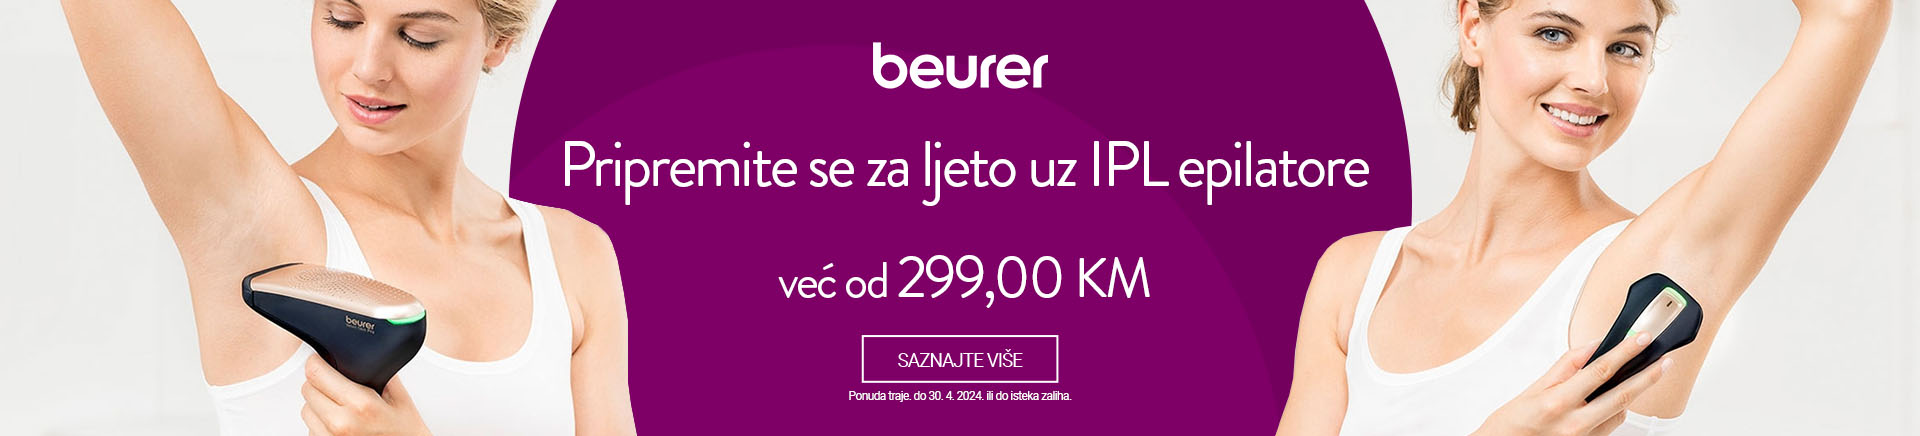 BA~Beurer IPL epilator pripreme za ljeto MOBILE 760x872.jpg